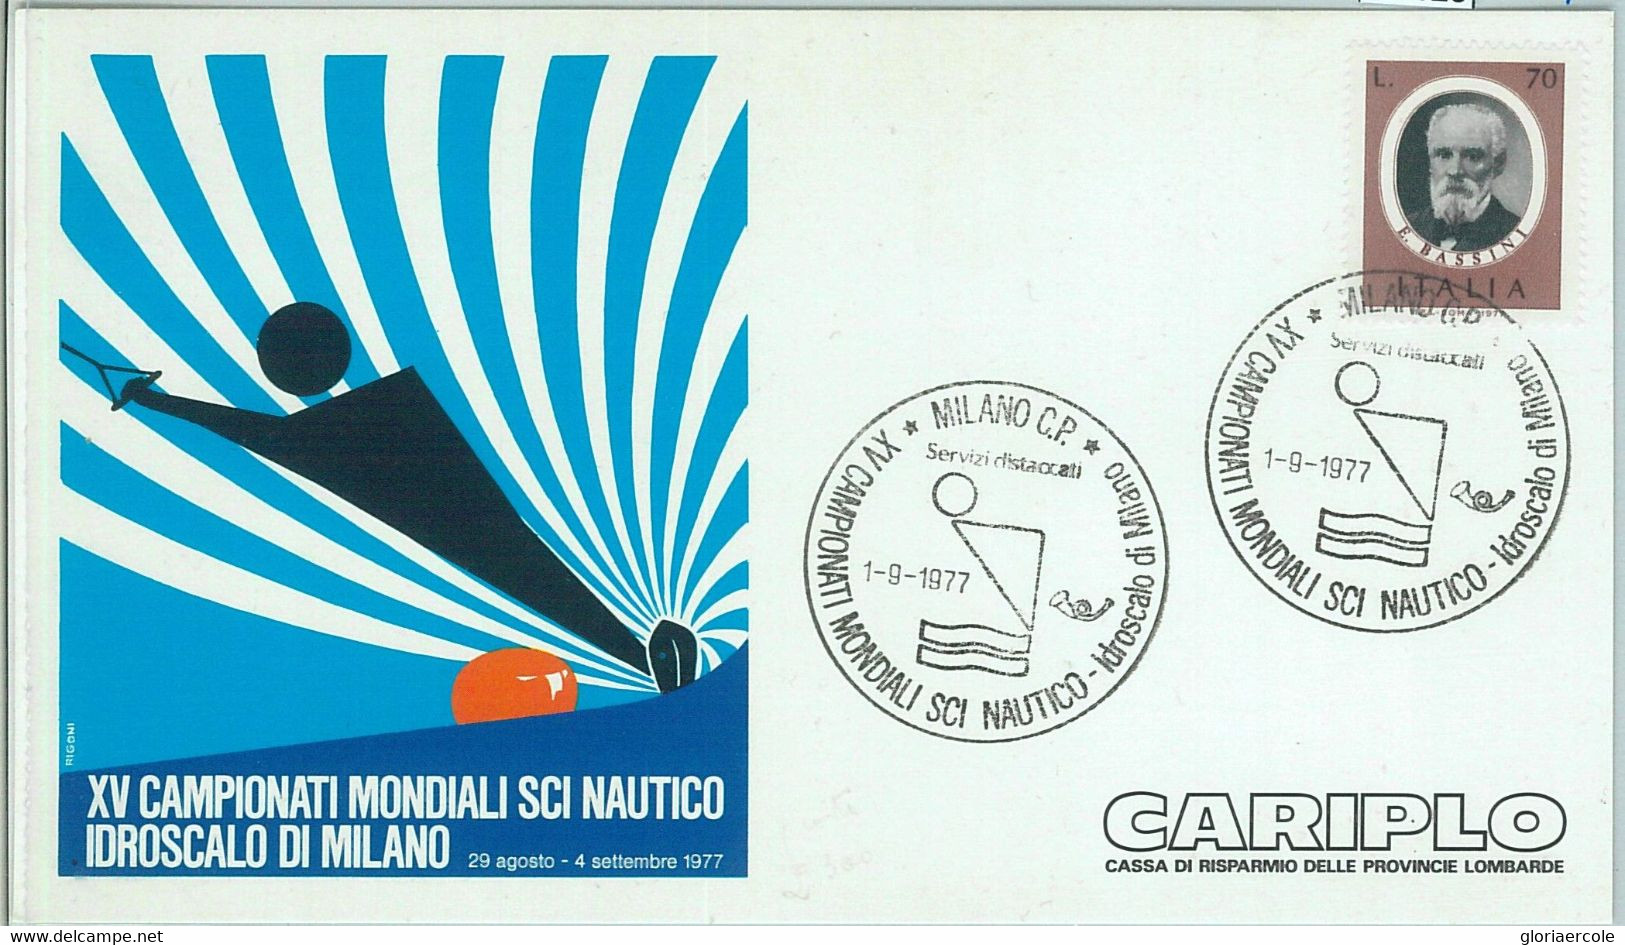 67823 - ITALY - POSTAL HISTORY - SPECIAL POSTMARK On CARD - 1977, Water Skiing, Idroscalo Di Milano - Ski Nautique